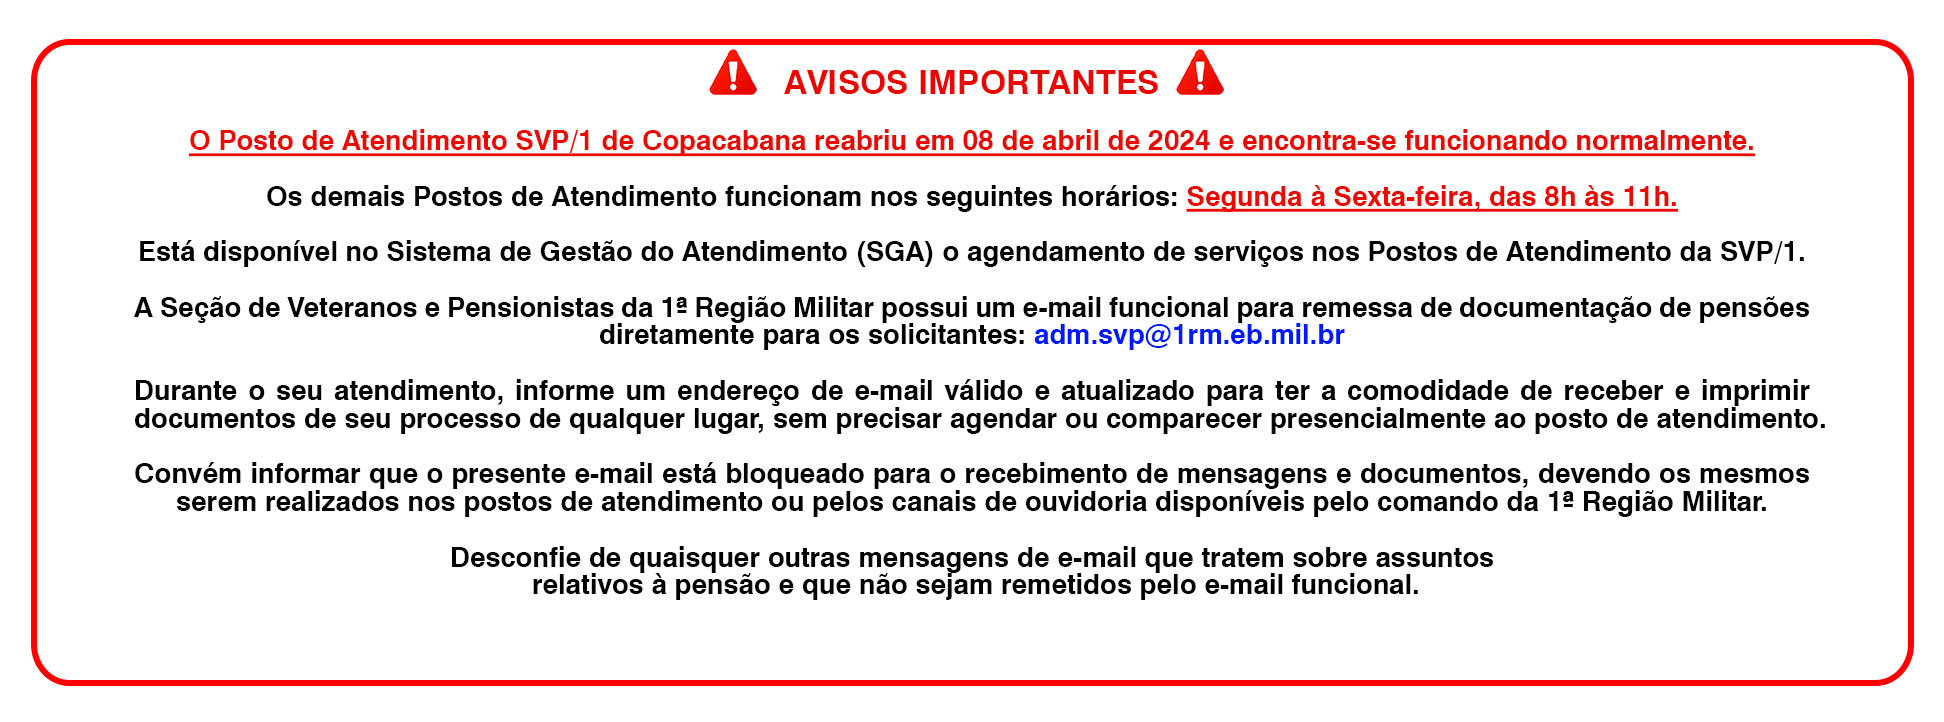 AVISOS IMPORTANTES 1 posto copacabana 05 2024